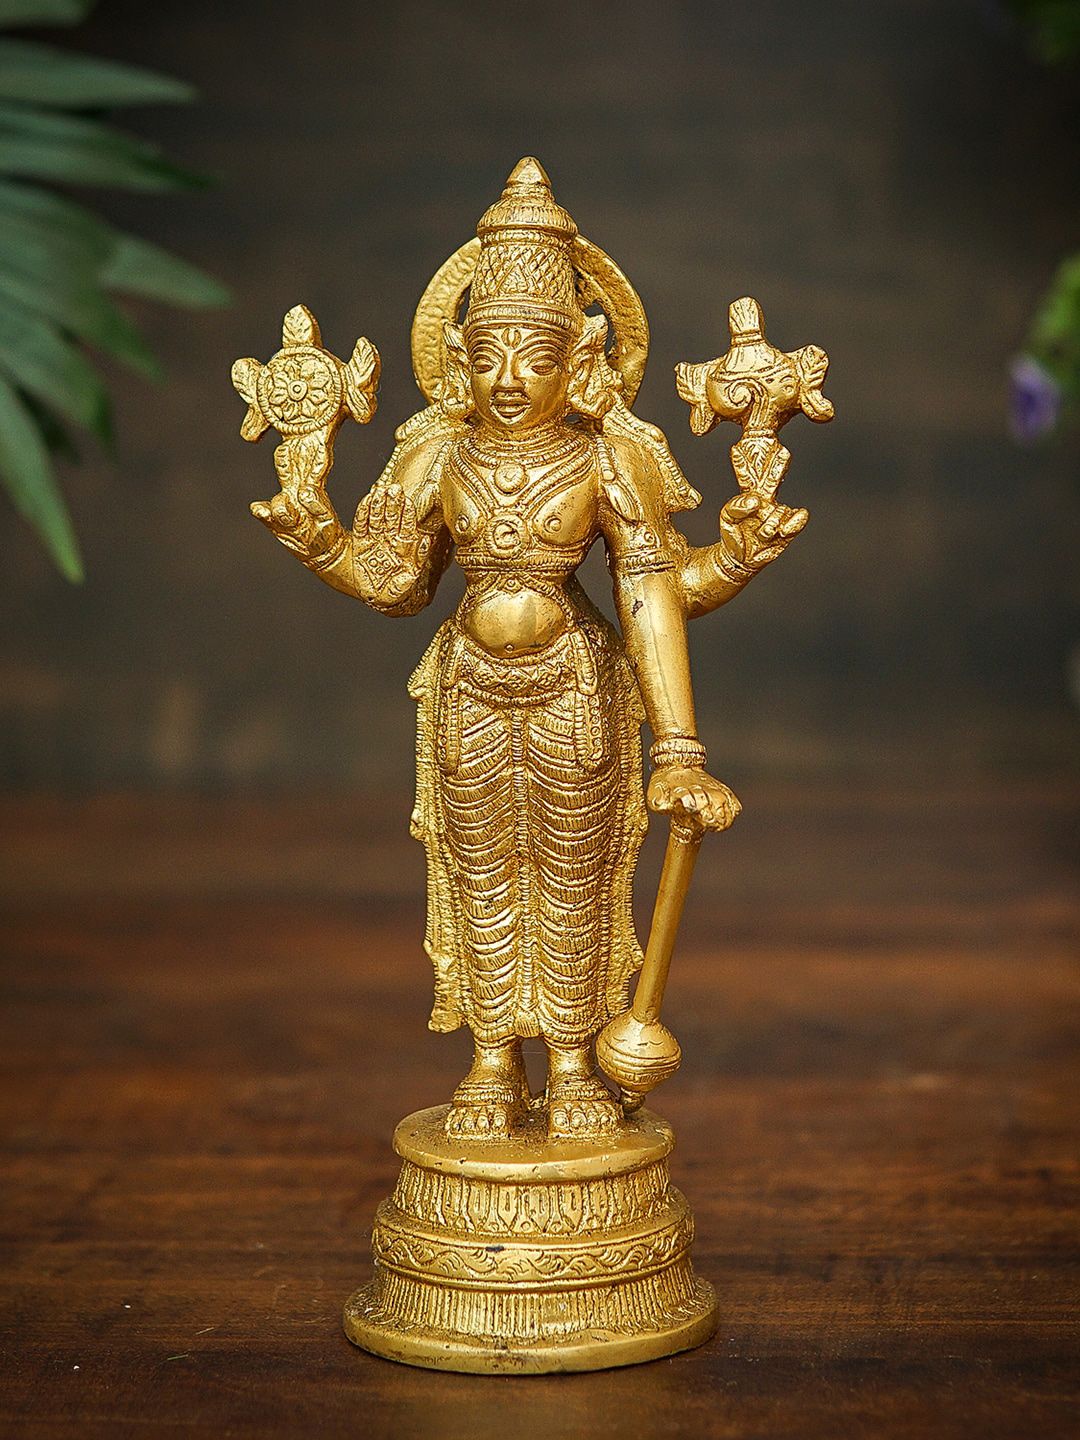 StatueStudio Brass Gold-Toned Lord Vishnu Idol Price in India